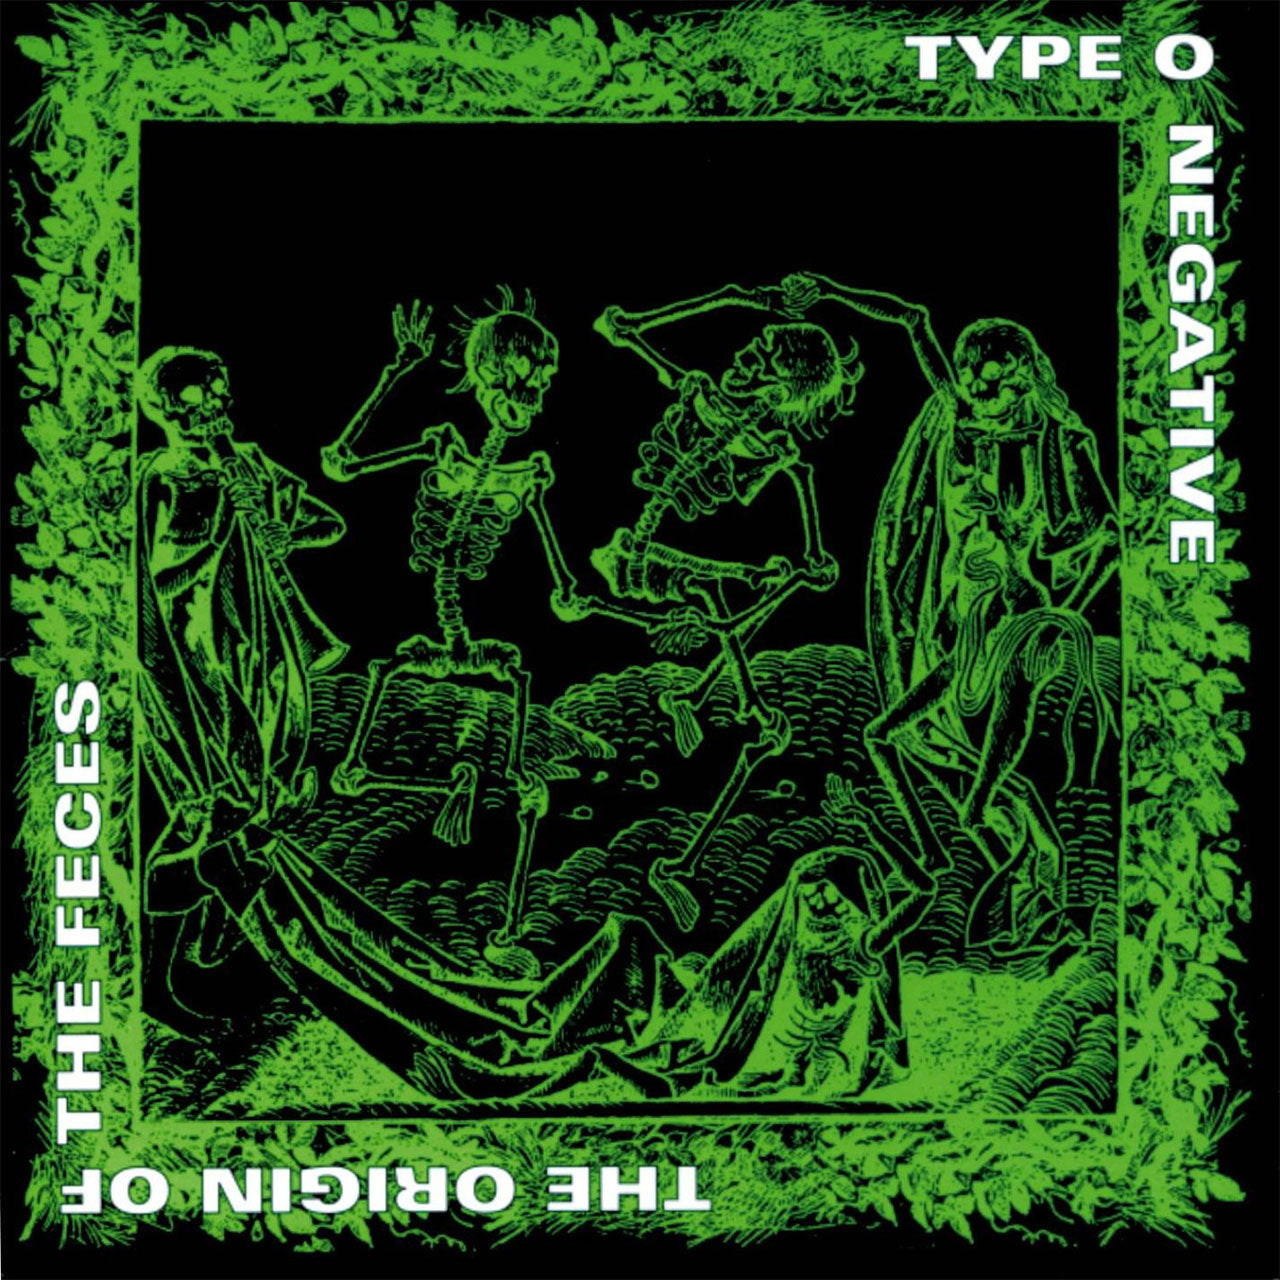 Type O Negative - The Origin of the Feces (CD)